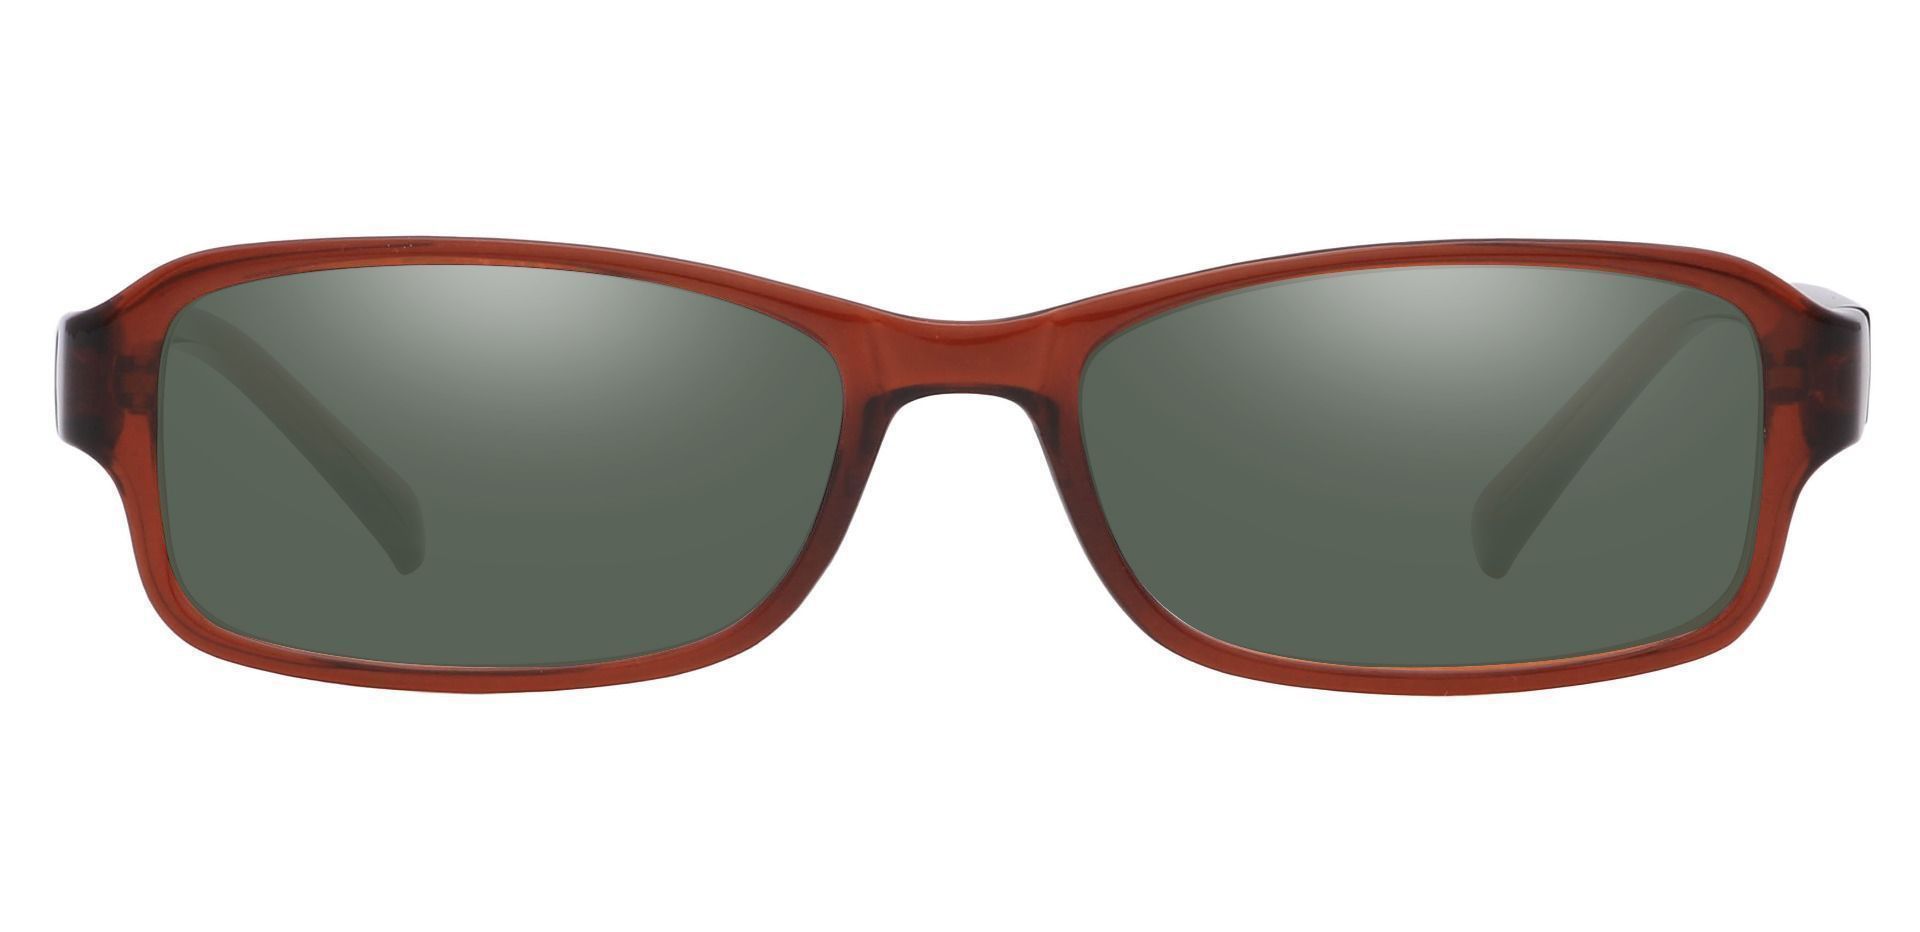 Rowan Rectangle Progressive Sunglasses - Brown Frame With Green Lenses